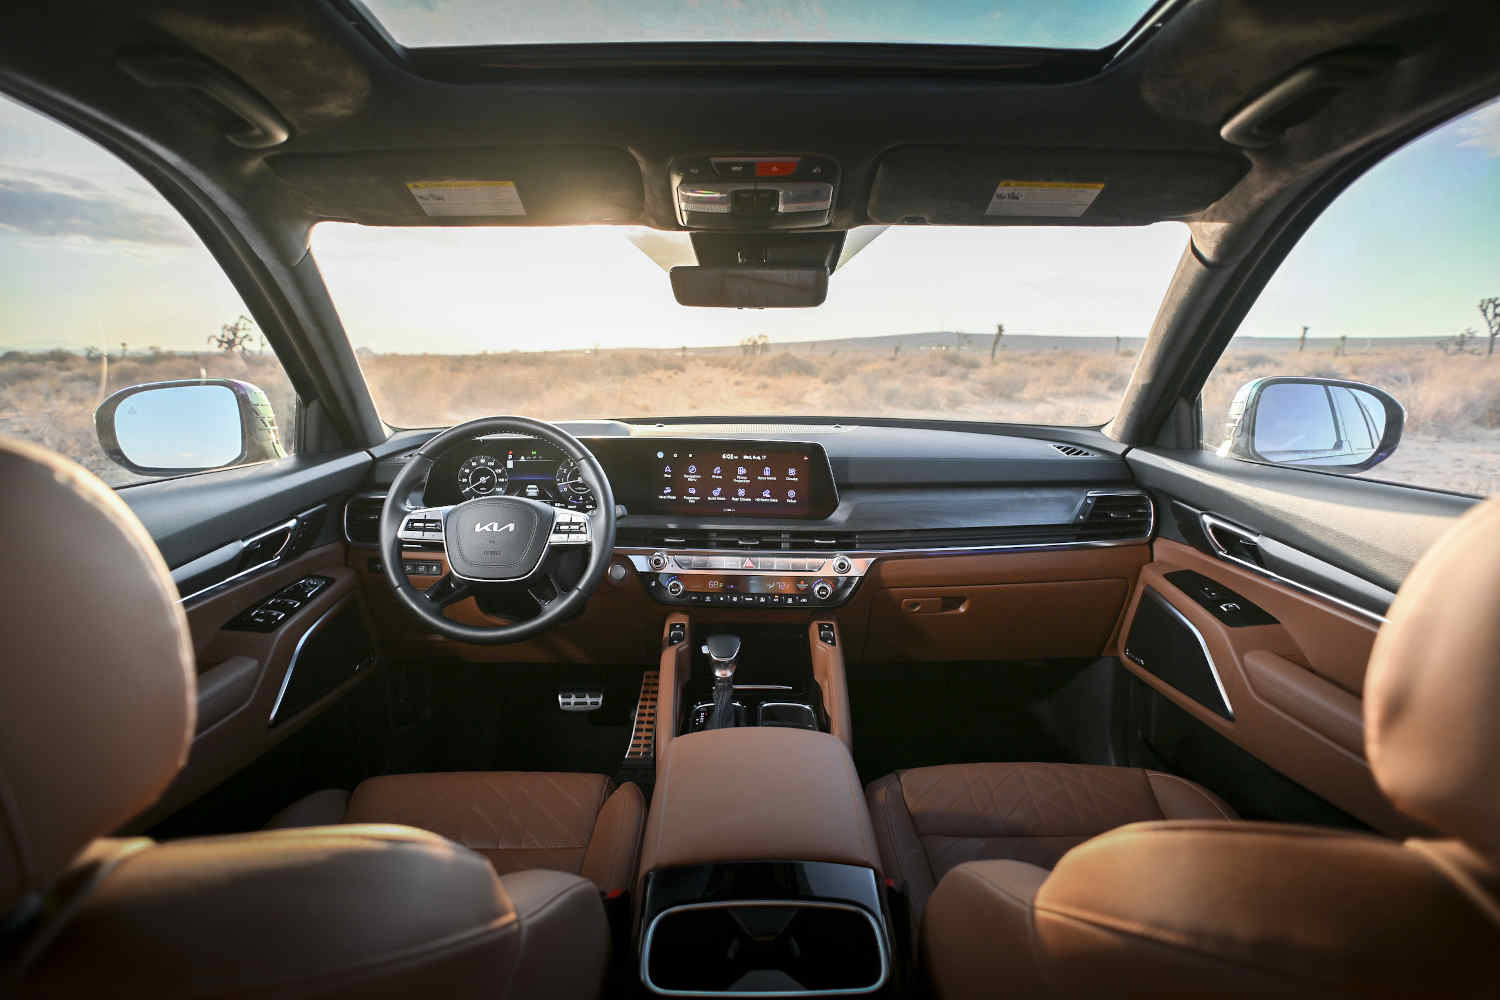 The 2023 Kia Telluride interior is bordering on luxury